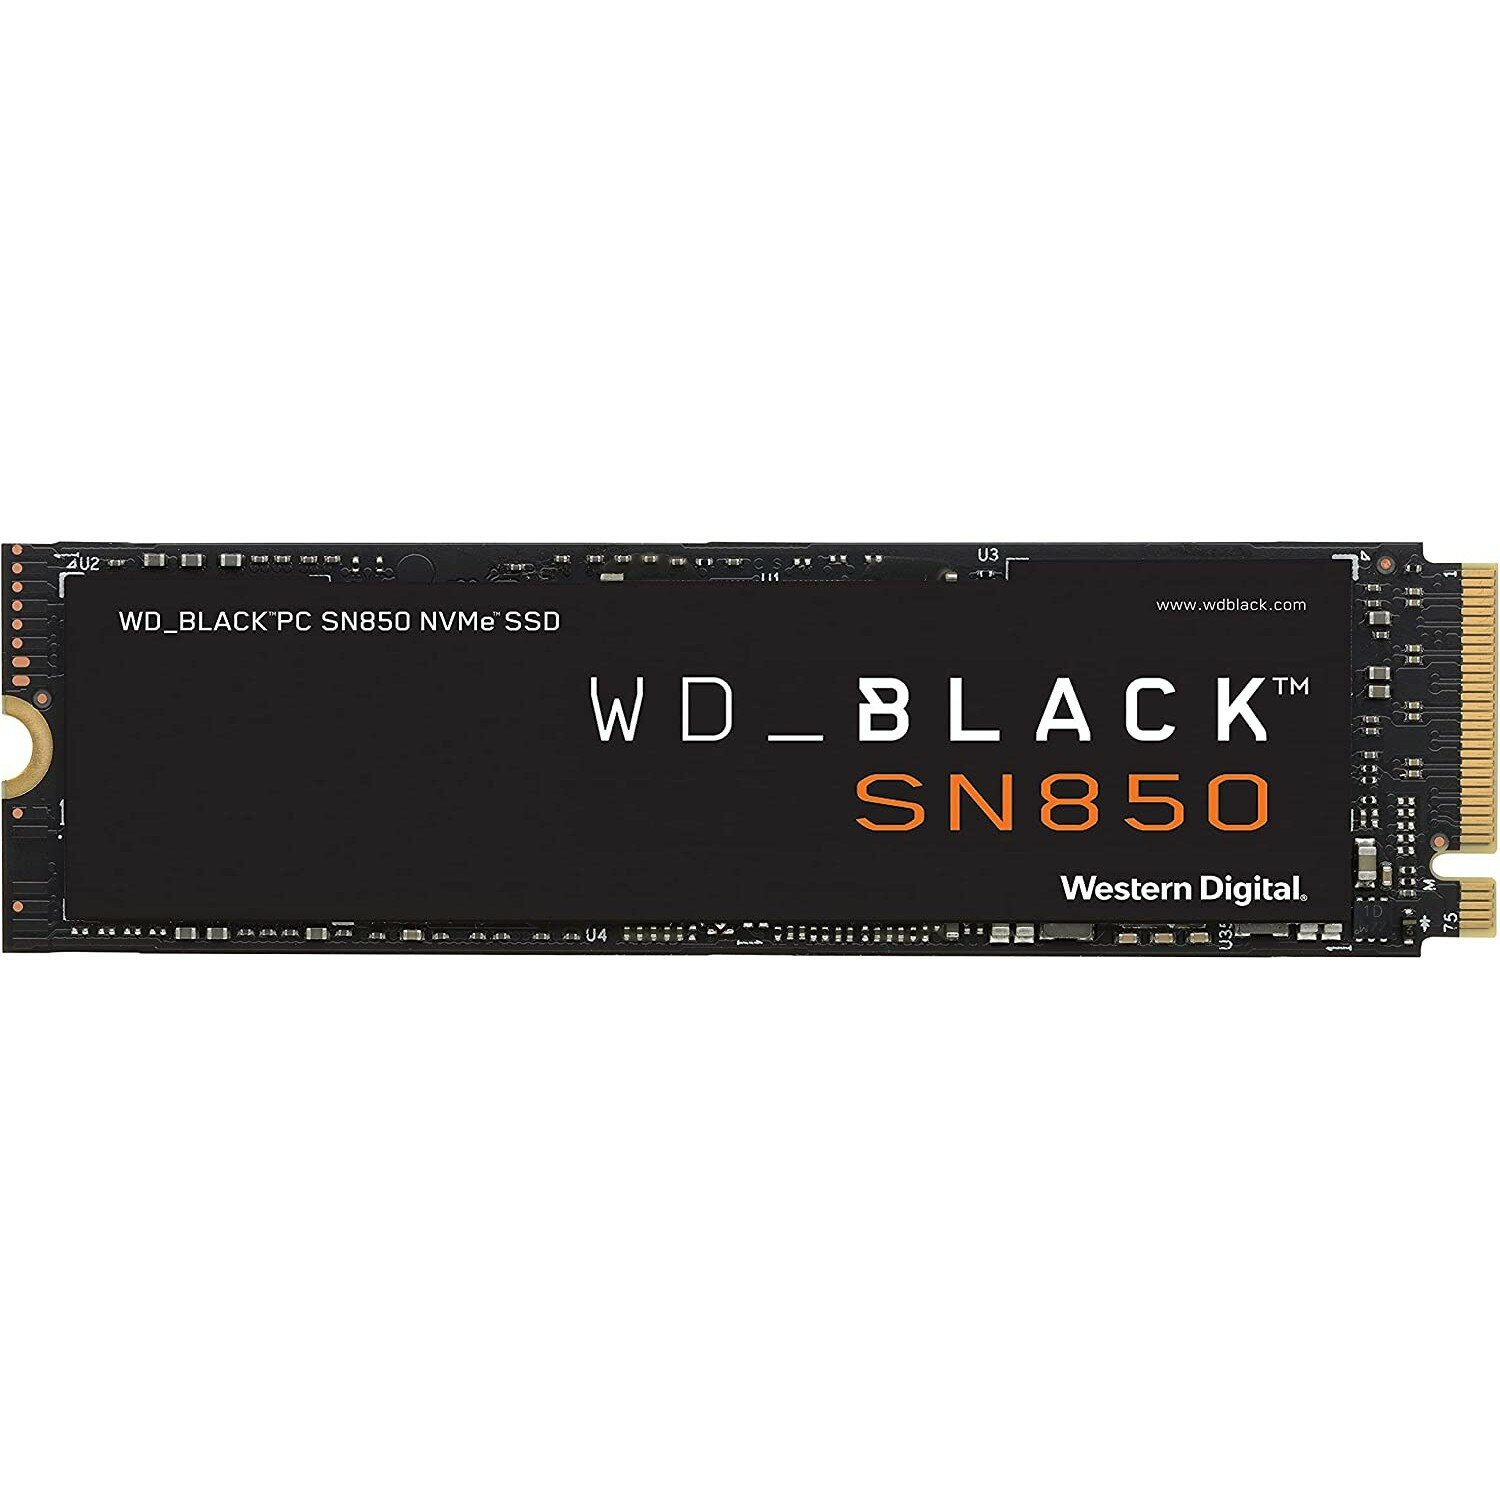 Western digital WD BLACK SN850 M.2 NVMe SSD PCIe Gen 4.0 500GB, Up to 7,000 4,100 Read Write